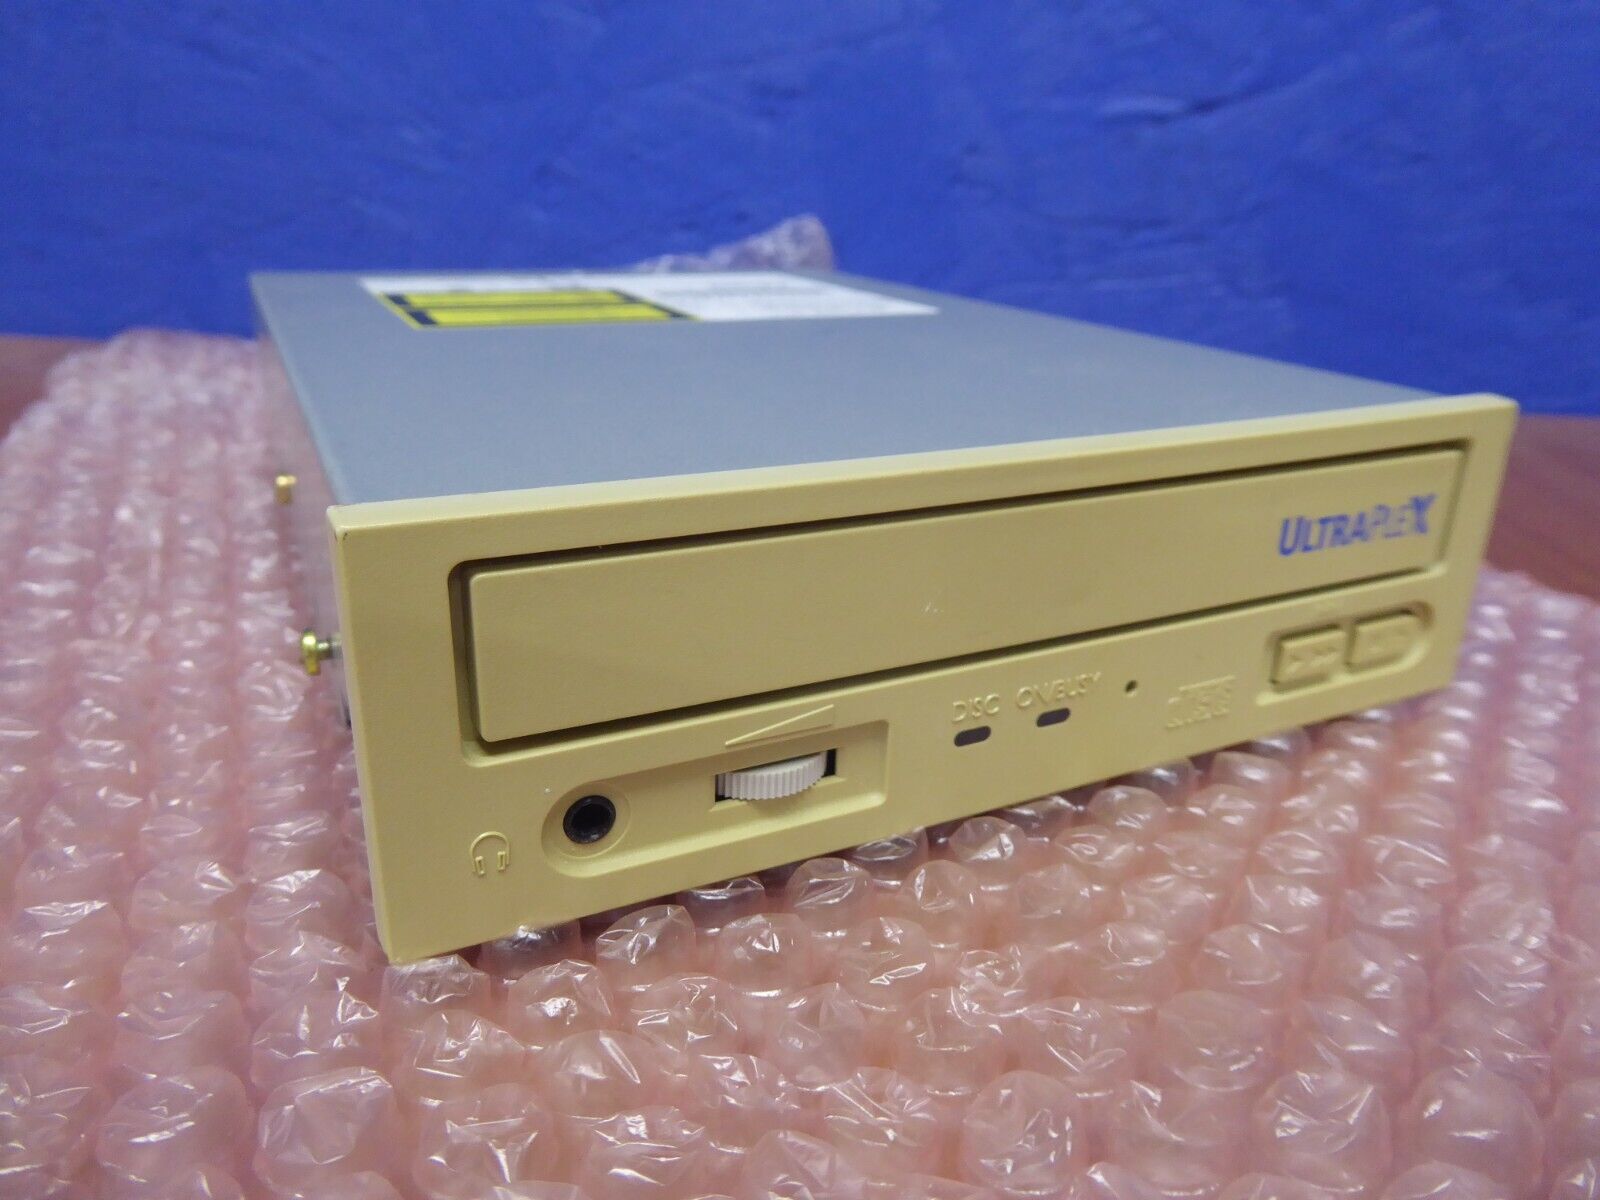 PLEXTOR PX-32TSi 50-PIN SCSI CD-ROM  OPTICAL DISK DRIVE JAPAN FEB 1998 - TESTED